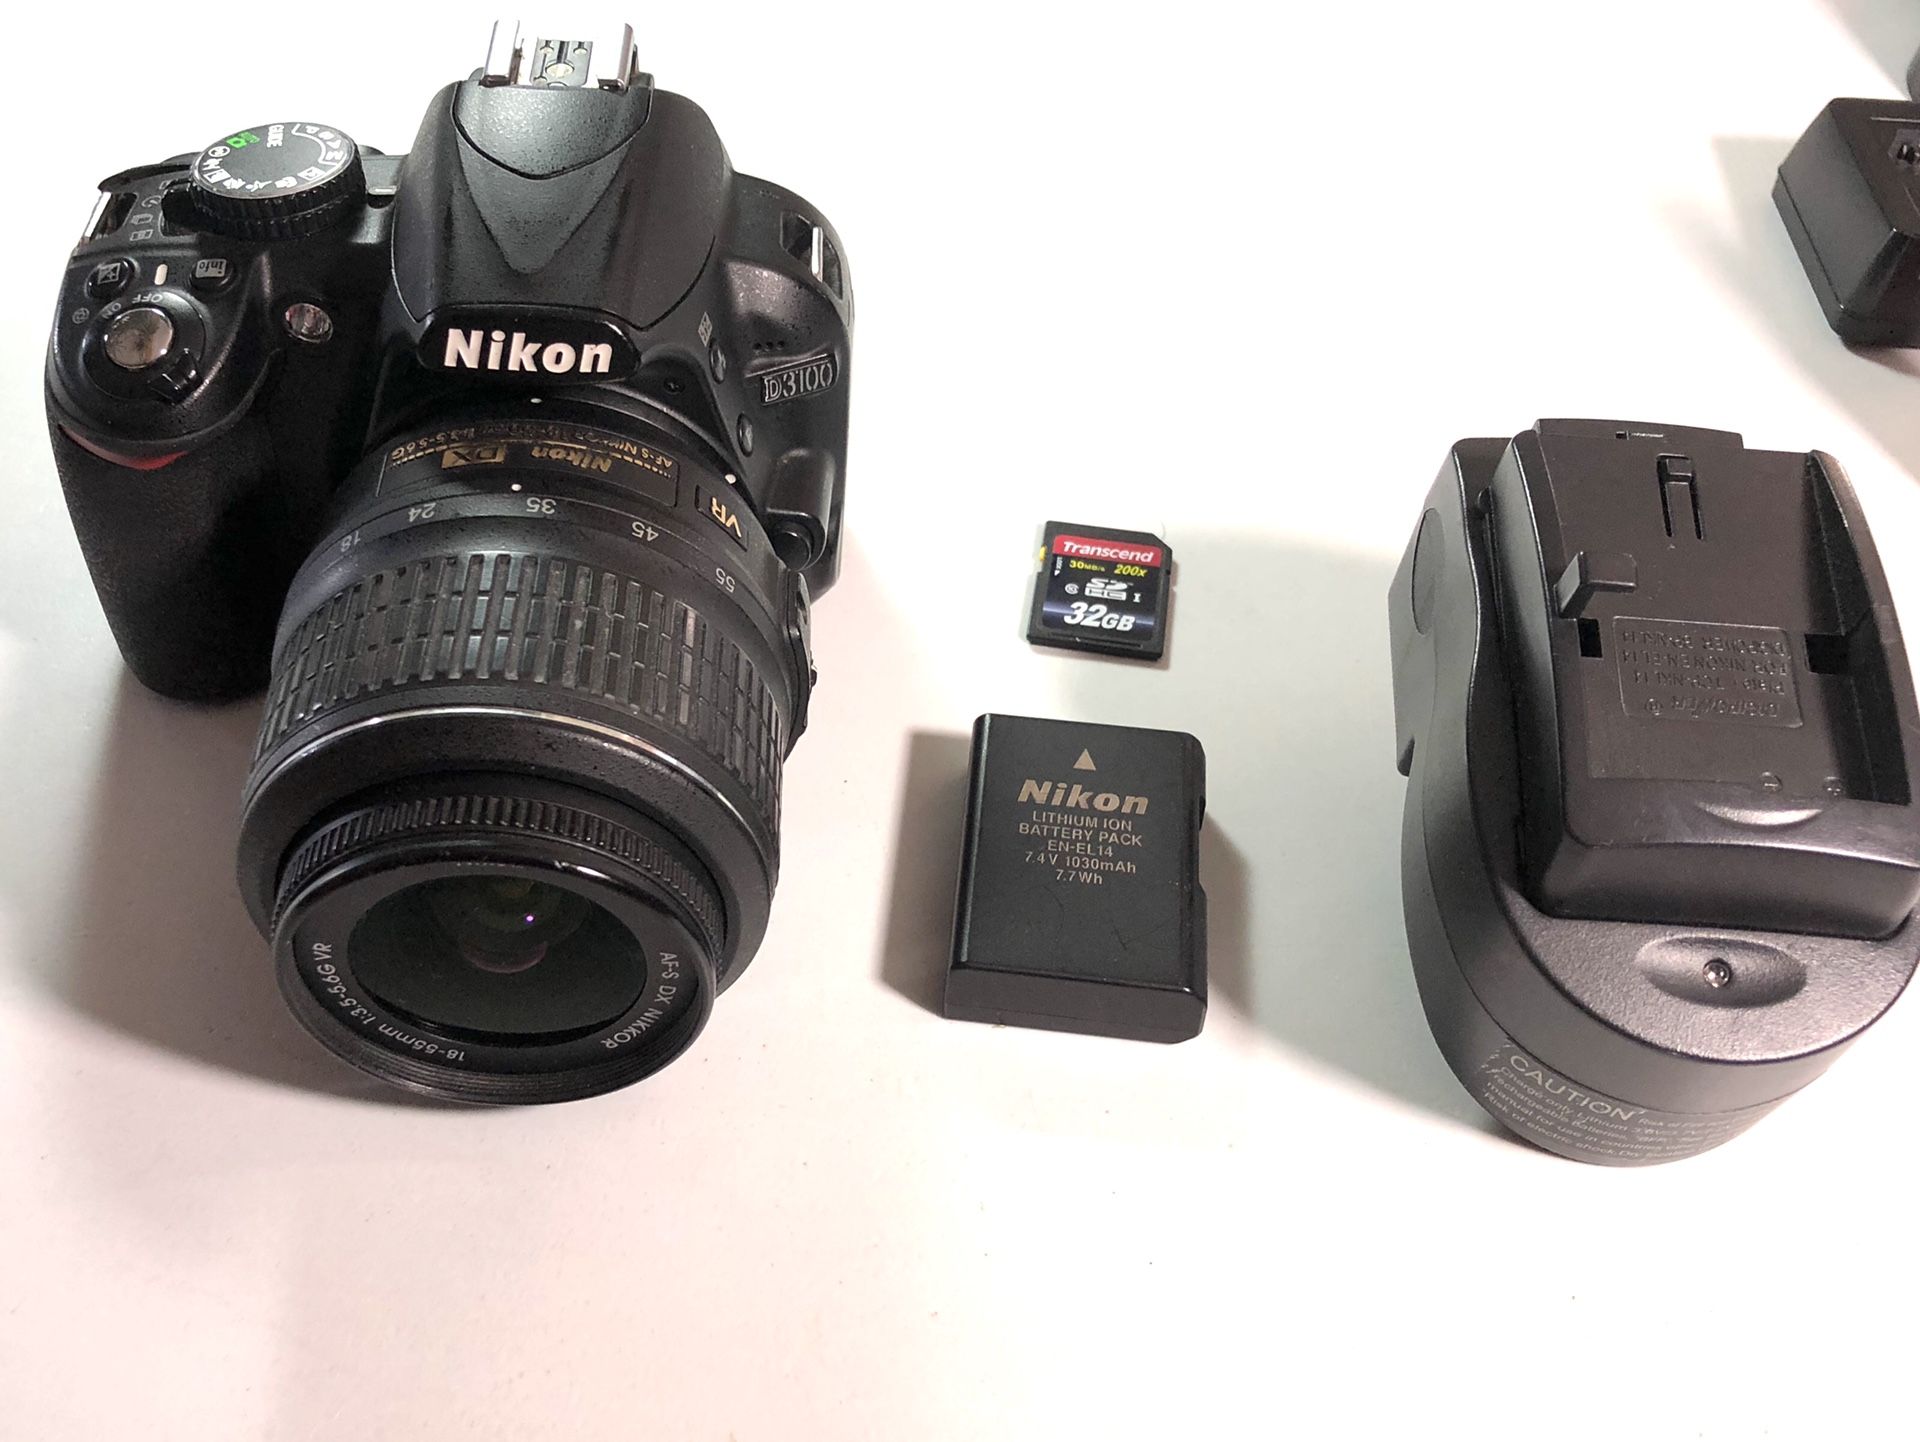 Nikon d3100 digital slr dslr camera with brand lens and memory card